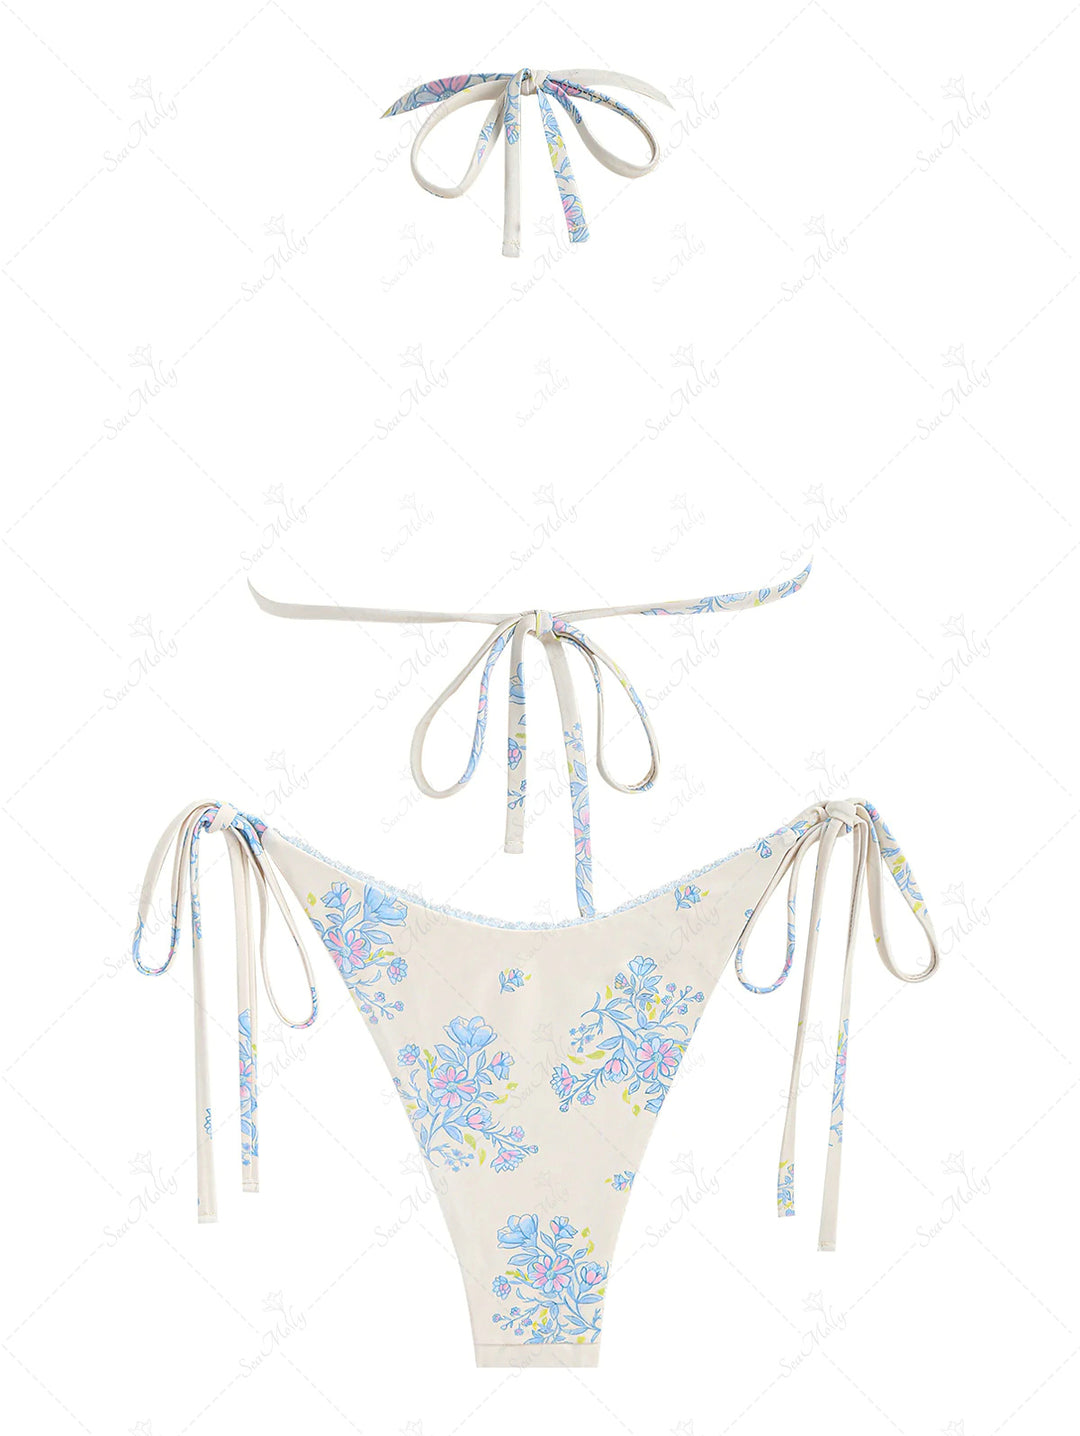 Seamolly Tiny Blue Floral Bow Tie Triangle Tanga Bikini Set